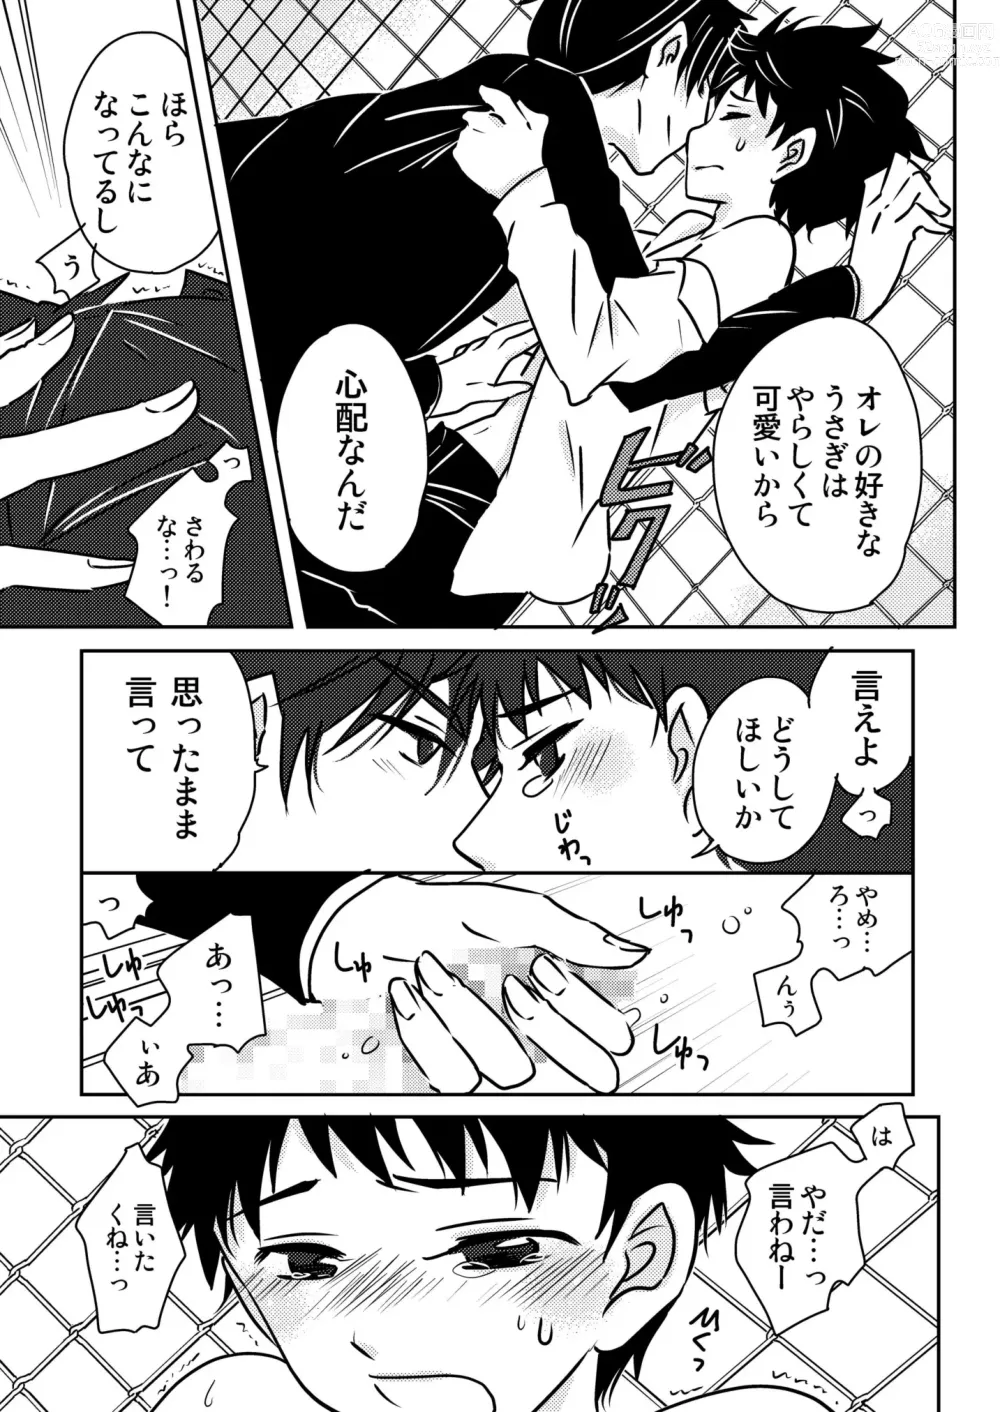 Page 5 of doujinshi Usagi no Koe 2